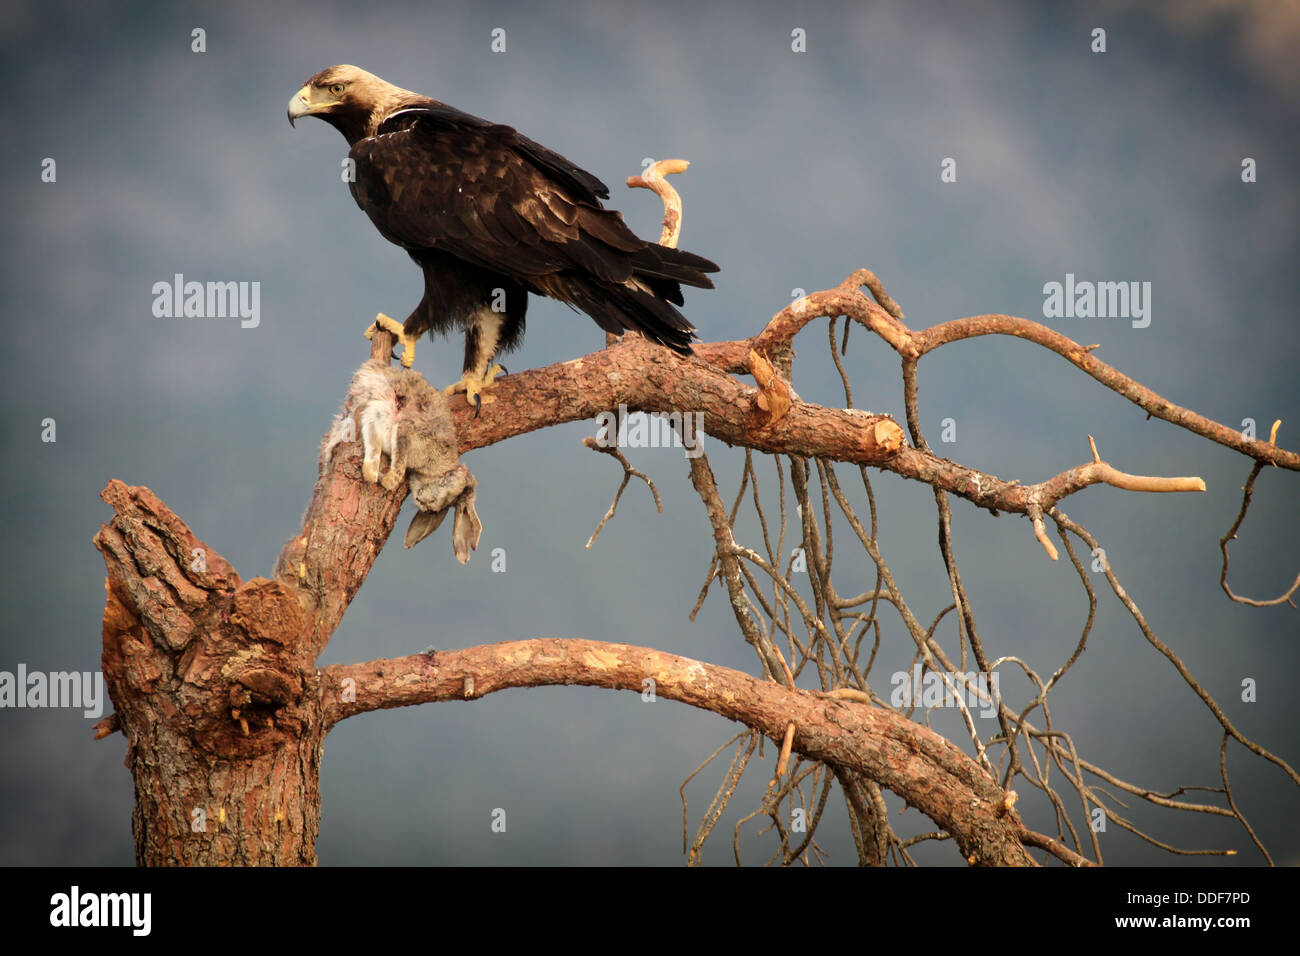 Spanish Imperial Eagle (Aquila adalberti) on tree branch with rabbit prey. Stock Photo